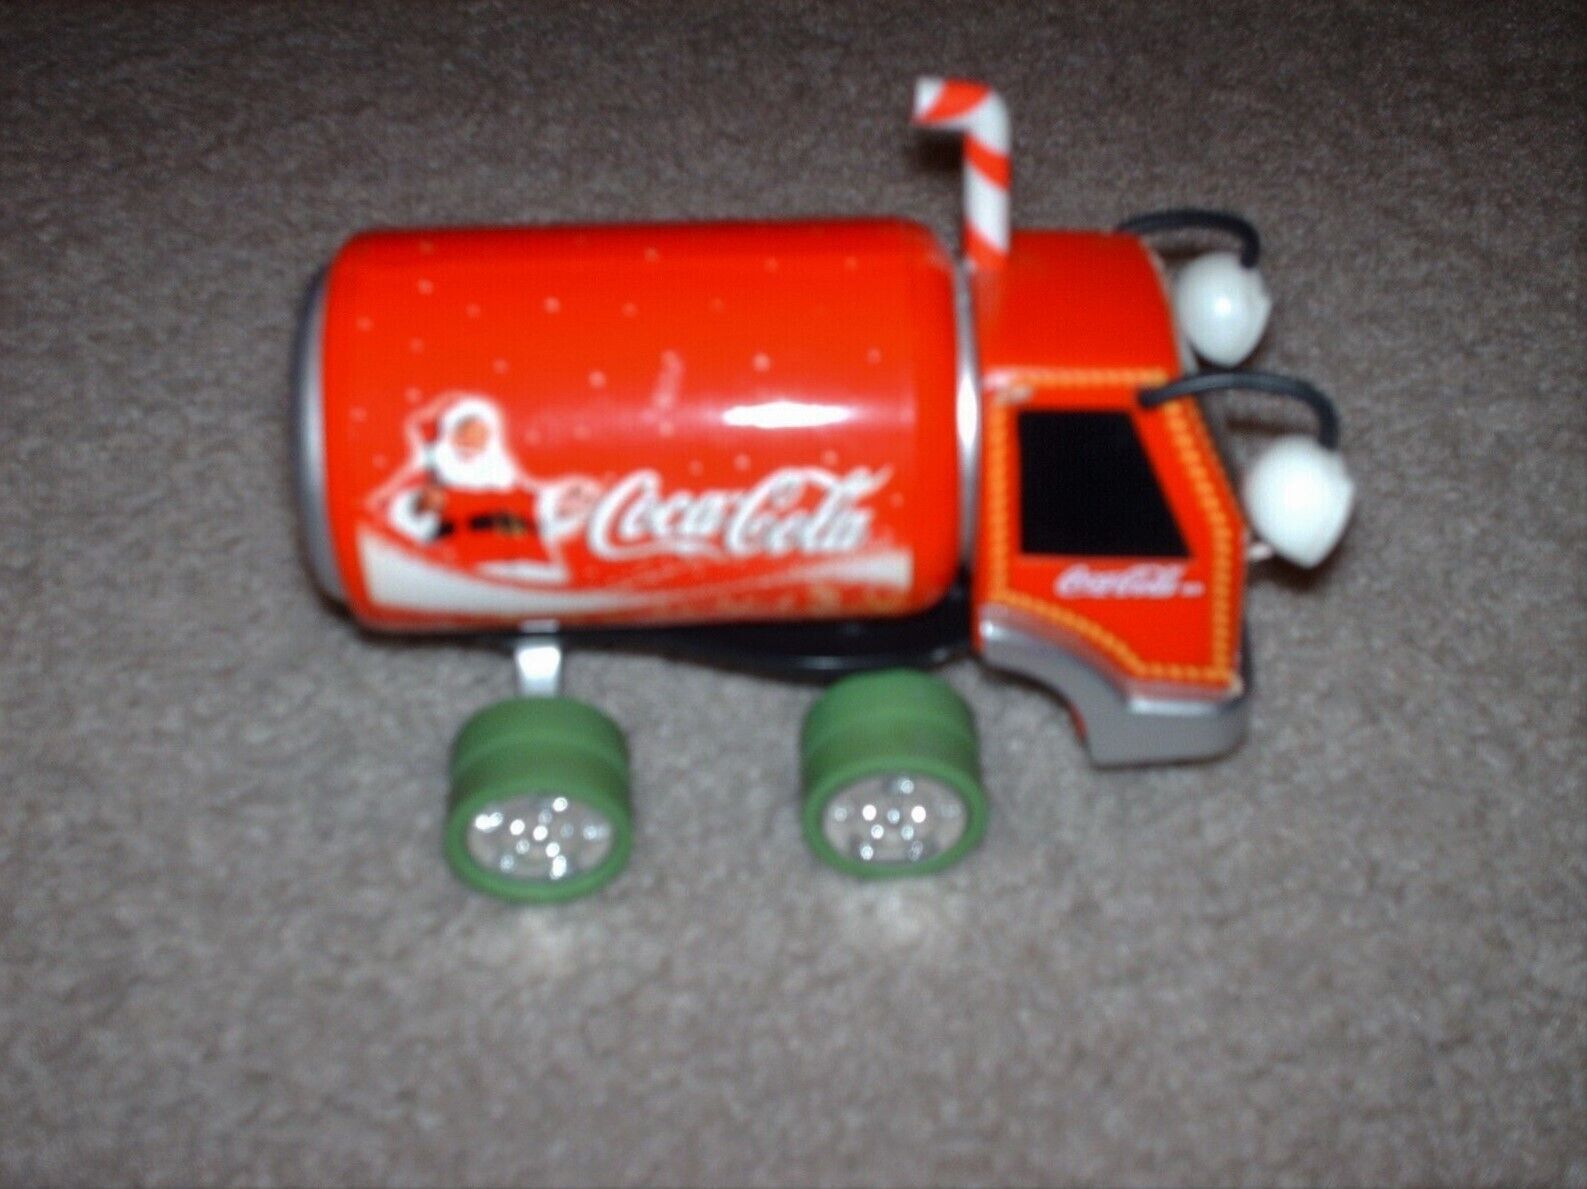 Primary image for Coca-Cola 2005 Caravana Truck Christmas Theme Santa Claus